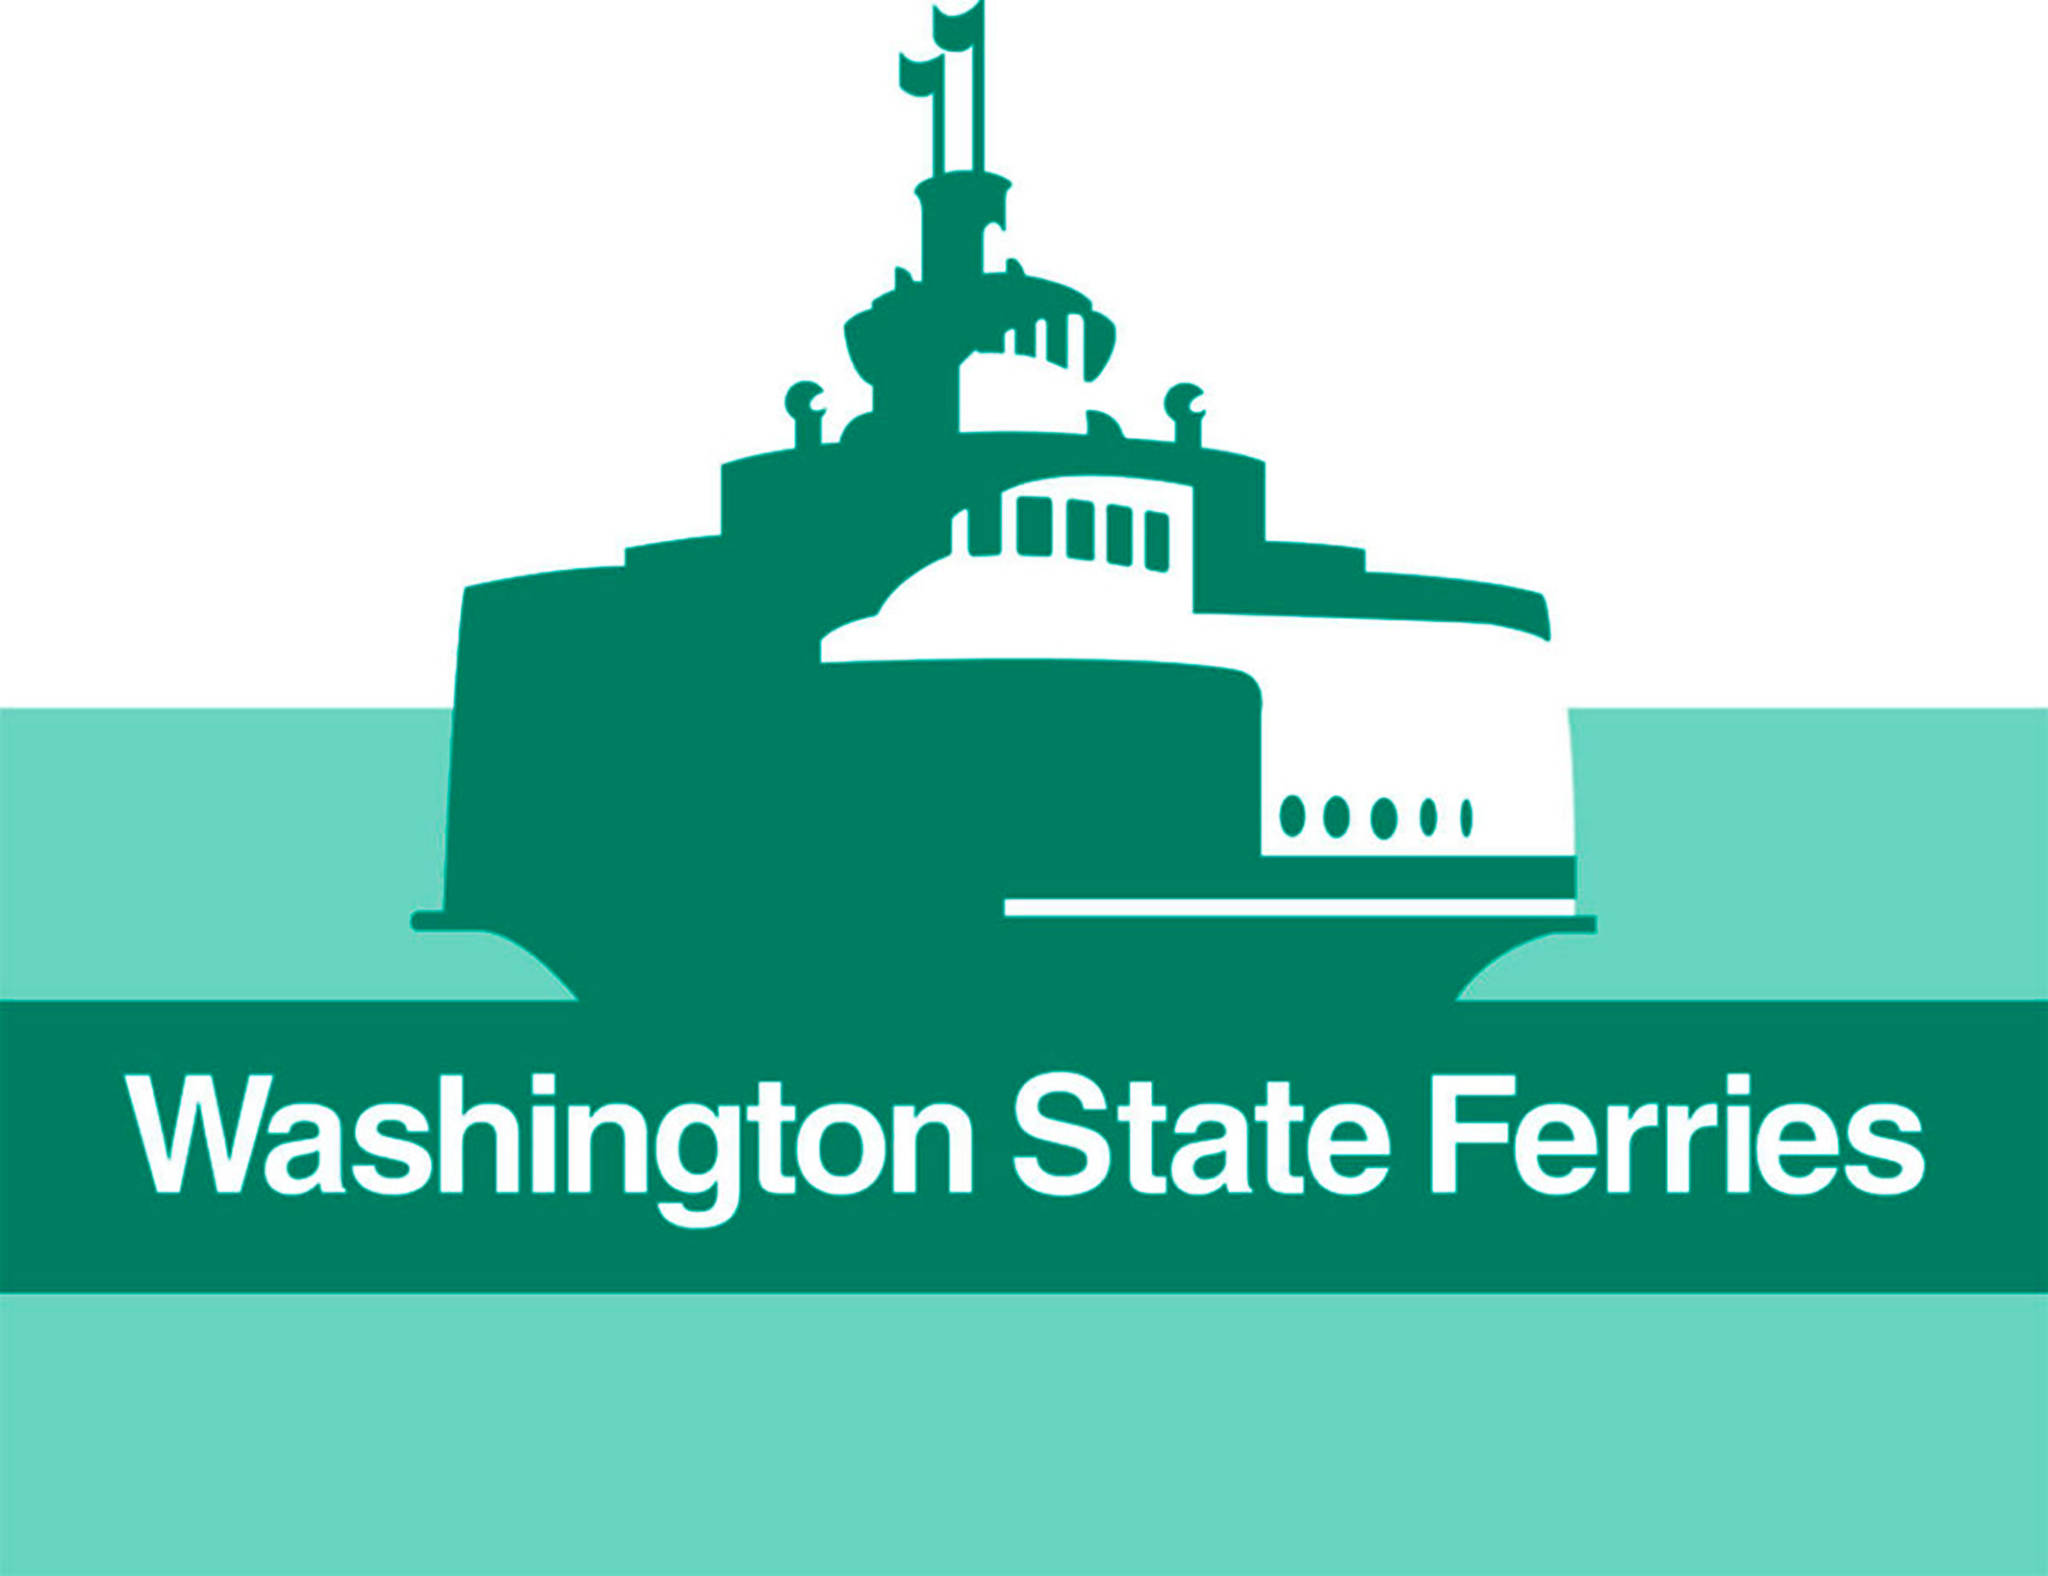 The scoop on broken Washington State Ferries